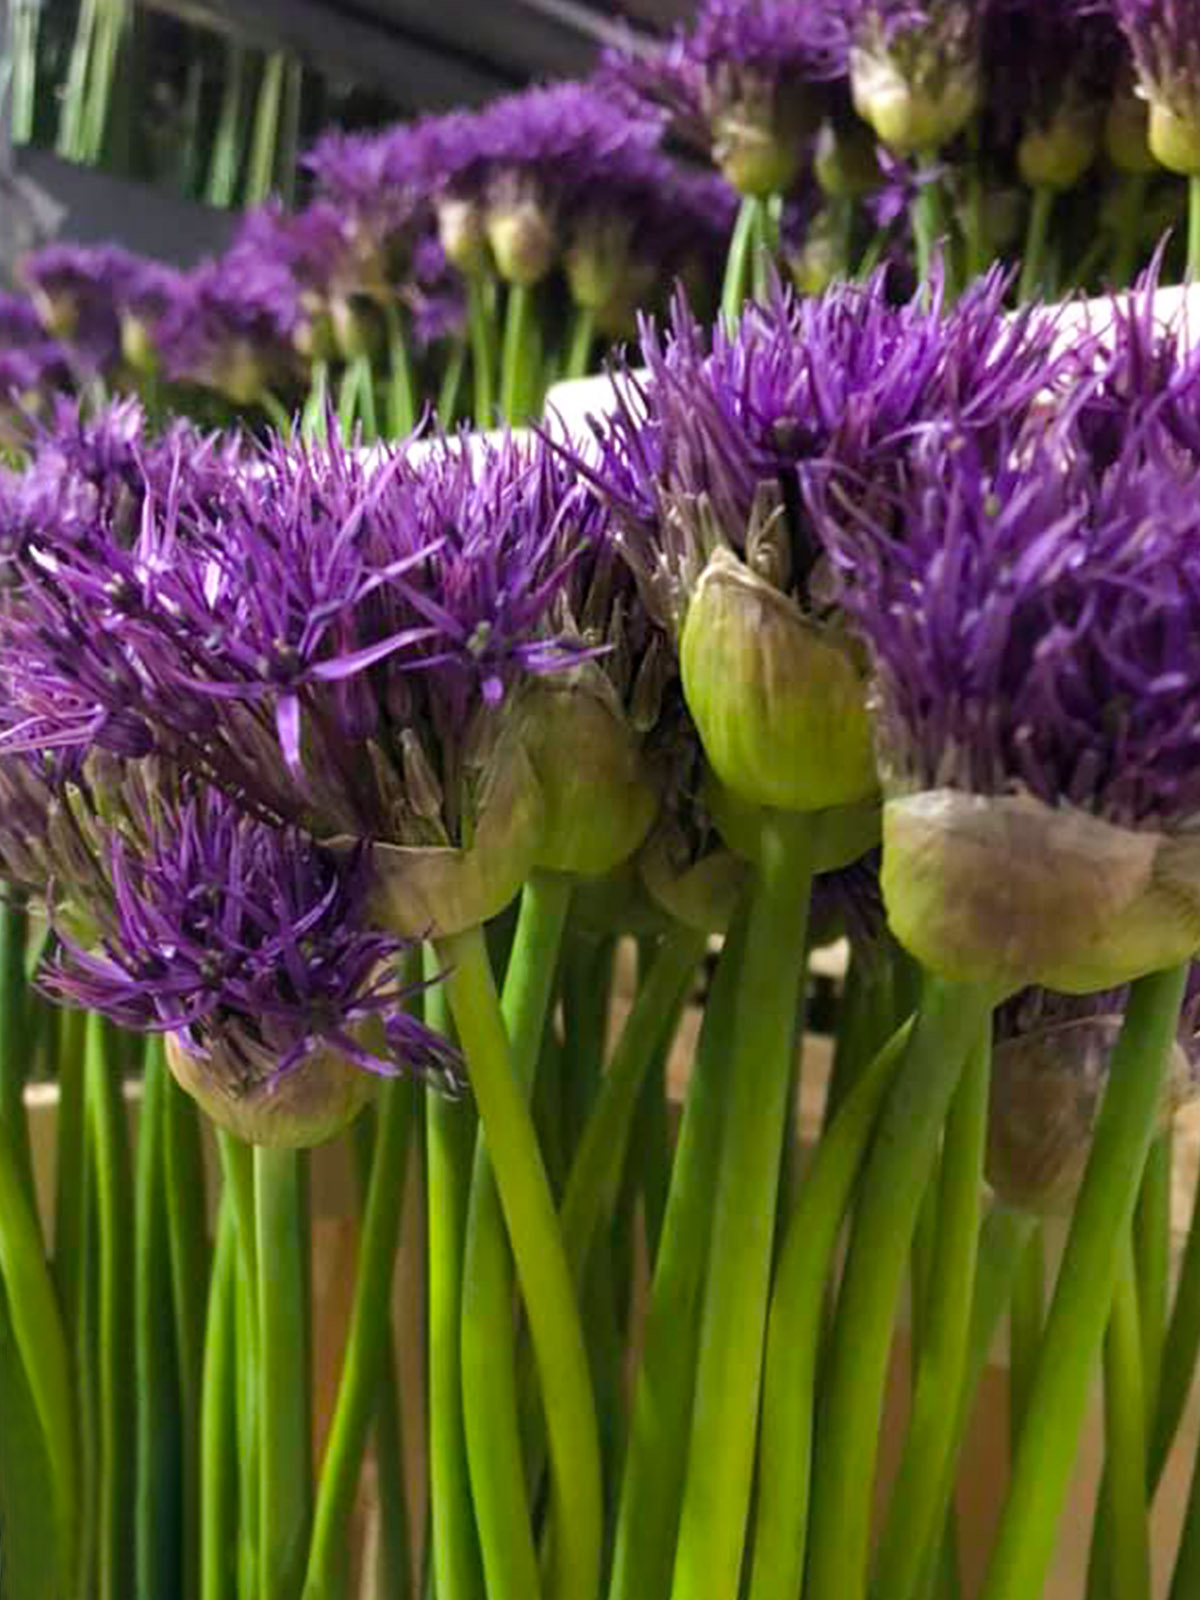 Allium Purple Rain by All I Am - on Thursd